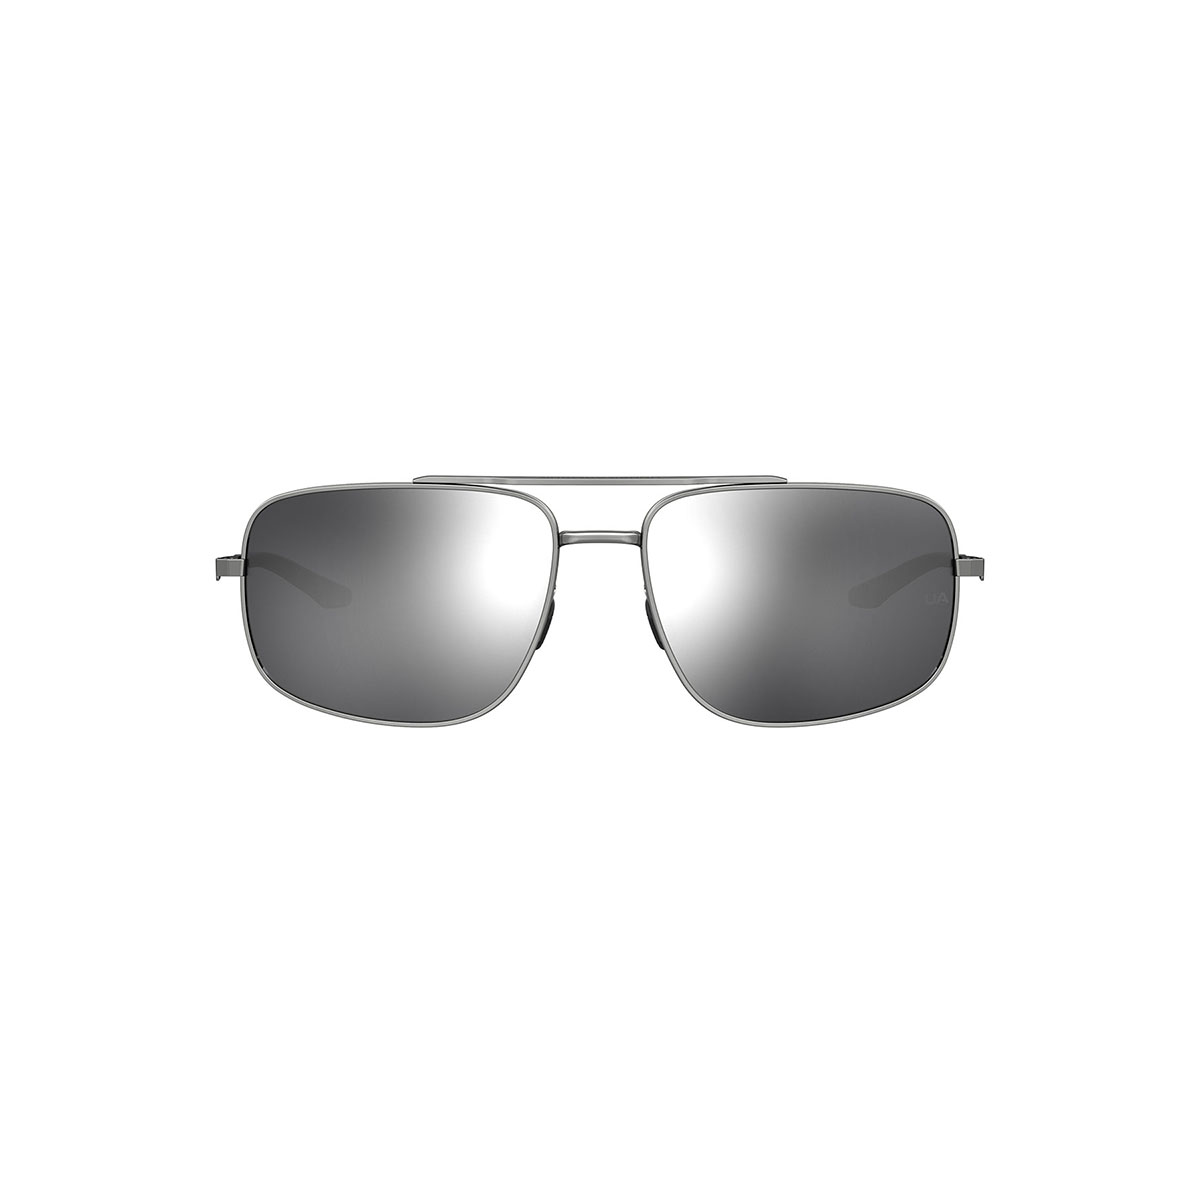 Under Armour 0015-G-S Sunglasses - Oculux